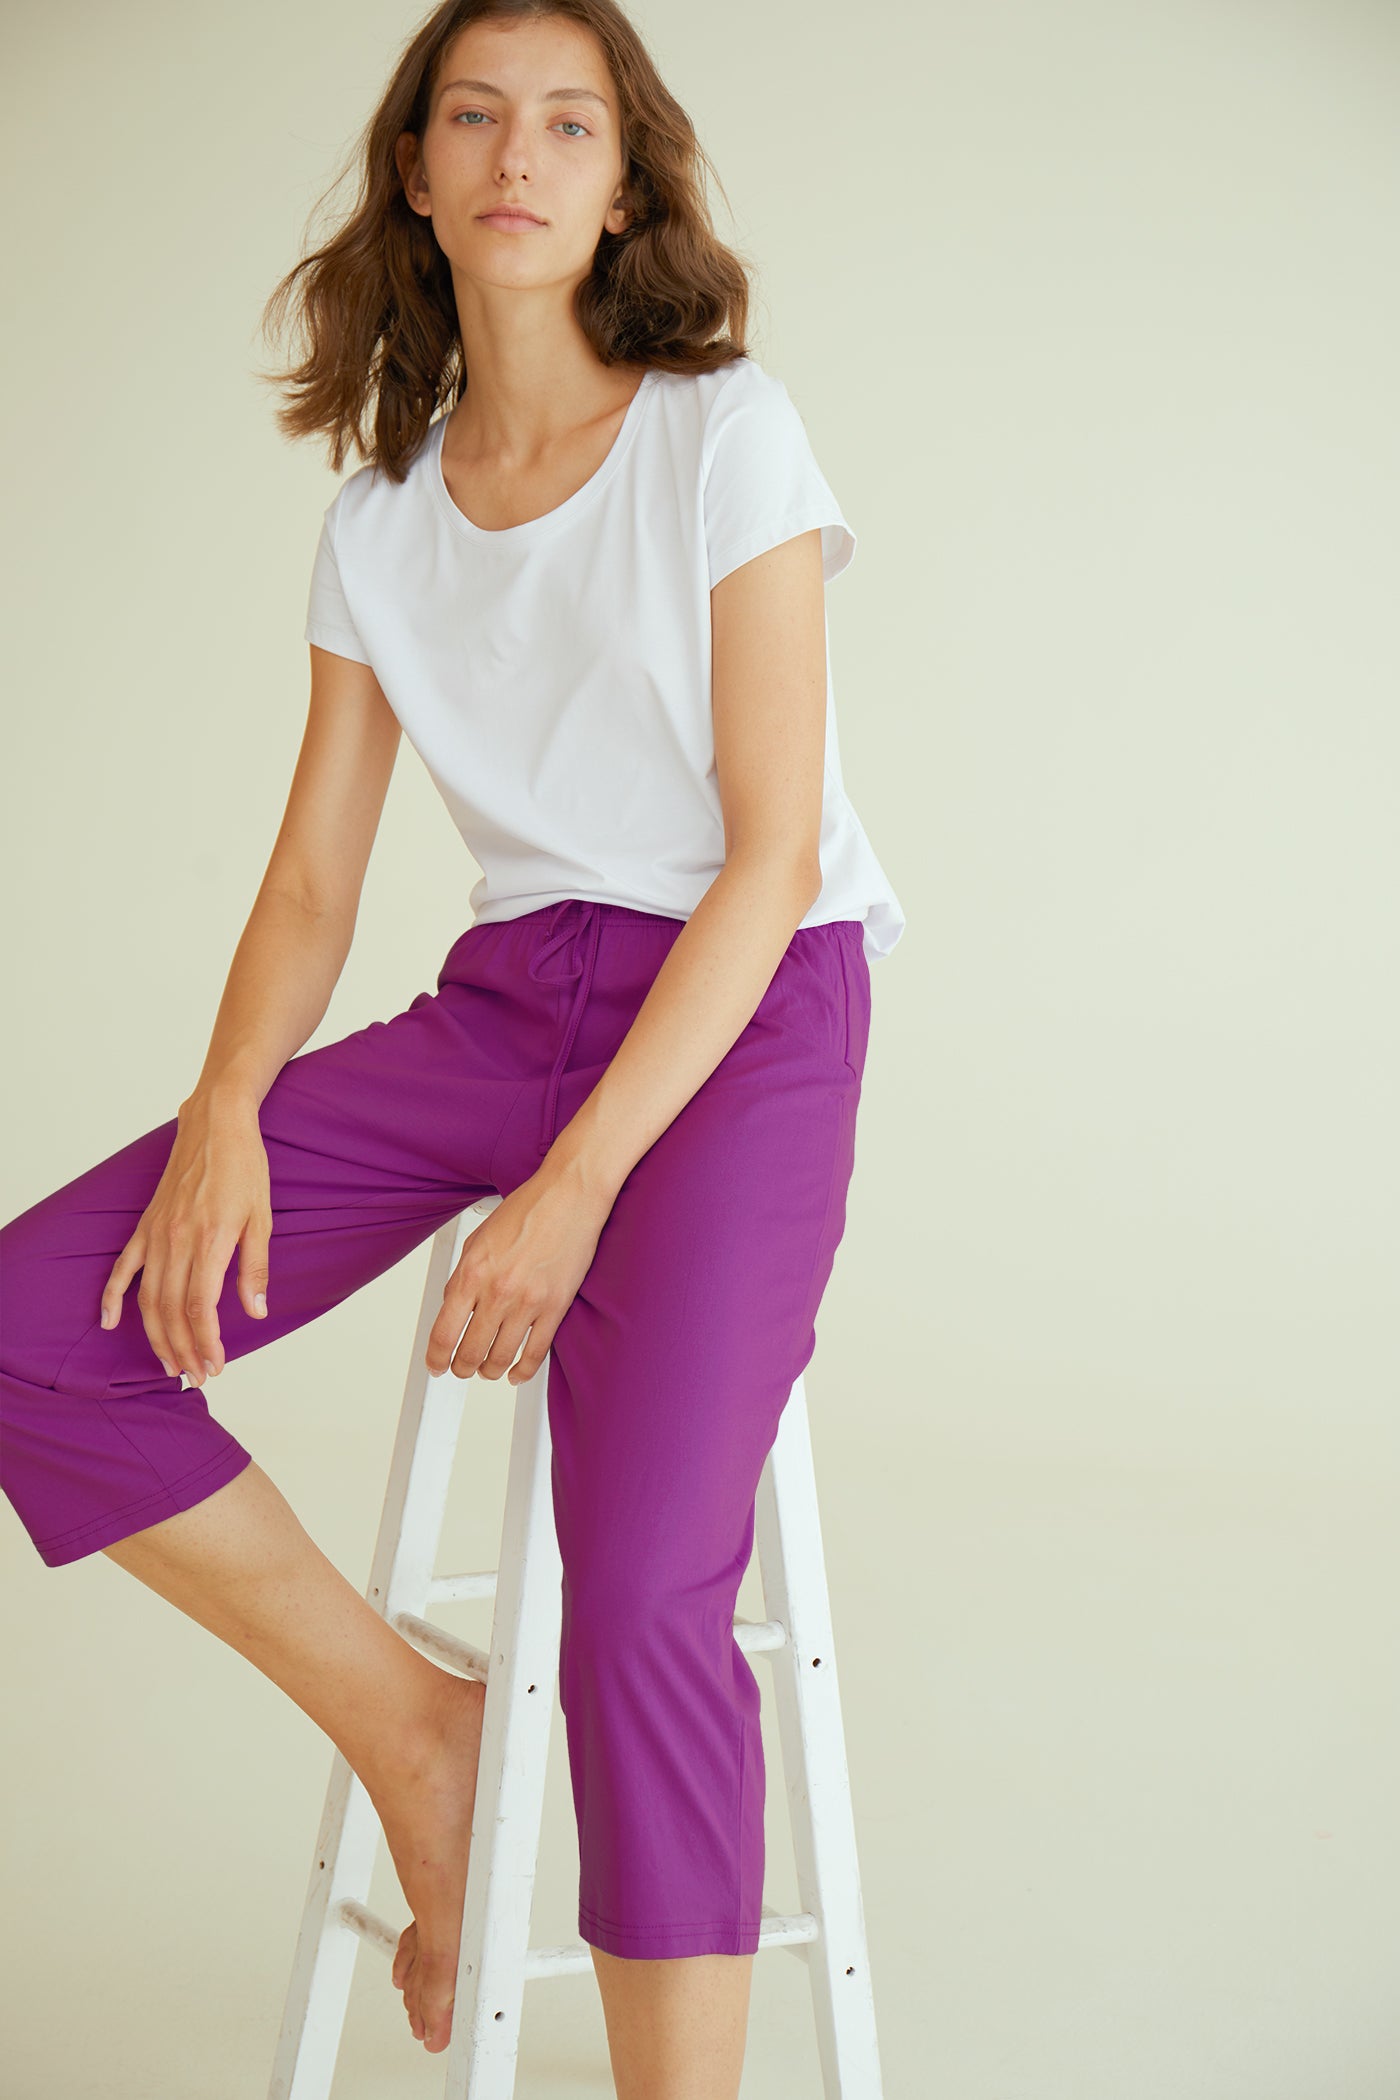 Buy LEXISLOVE Capris for Women Casual Summer Wide Leg Crop